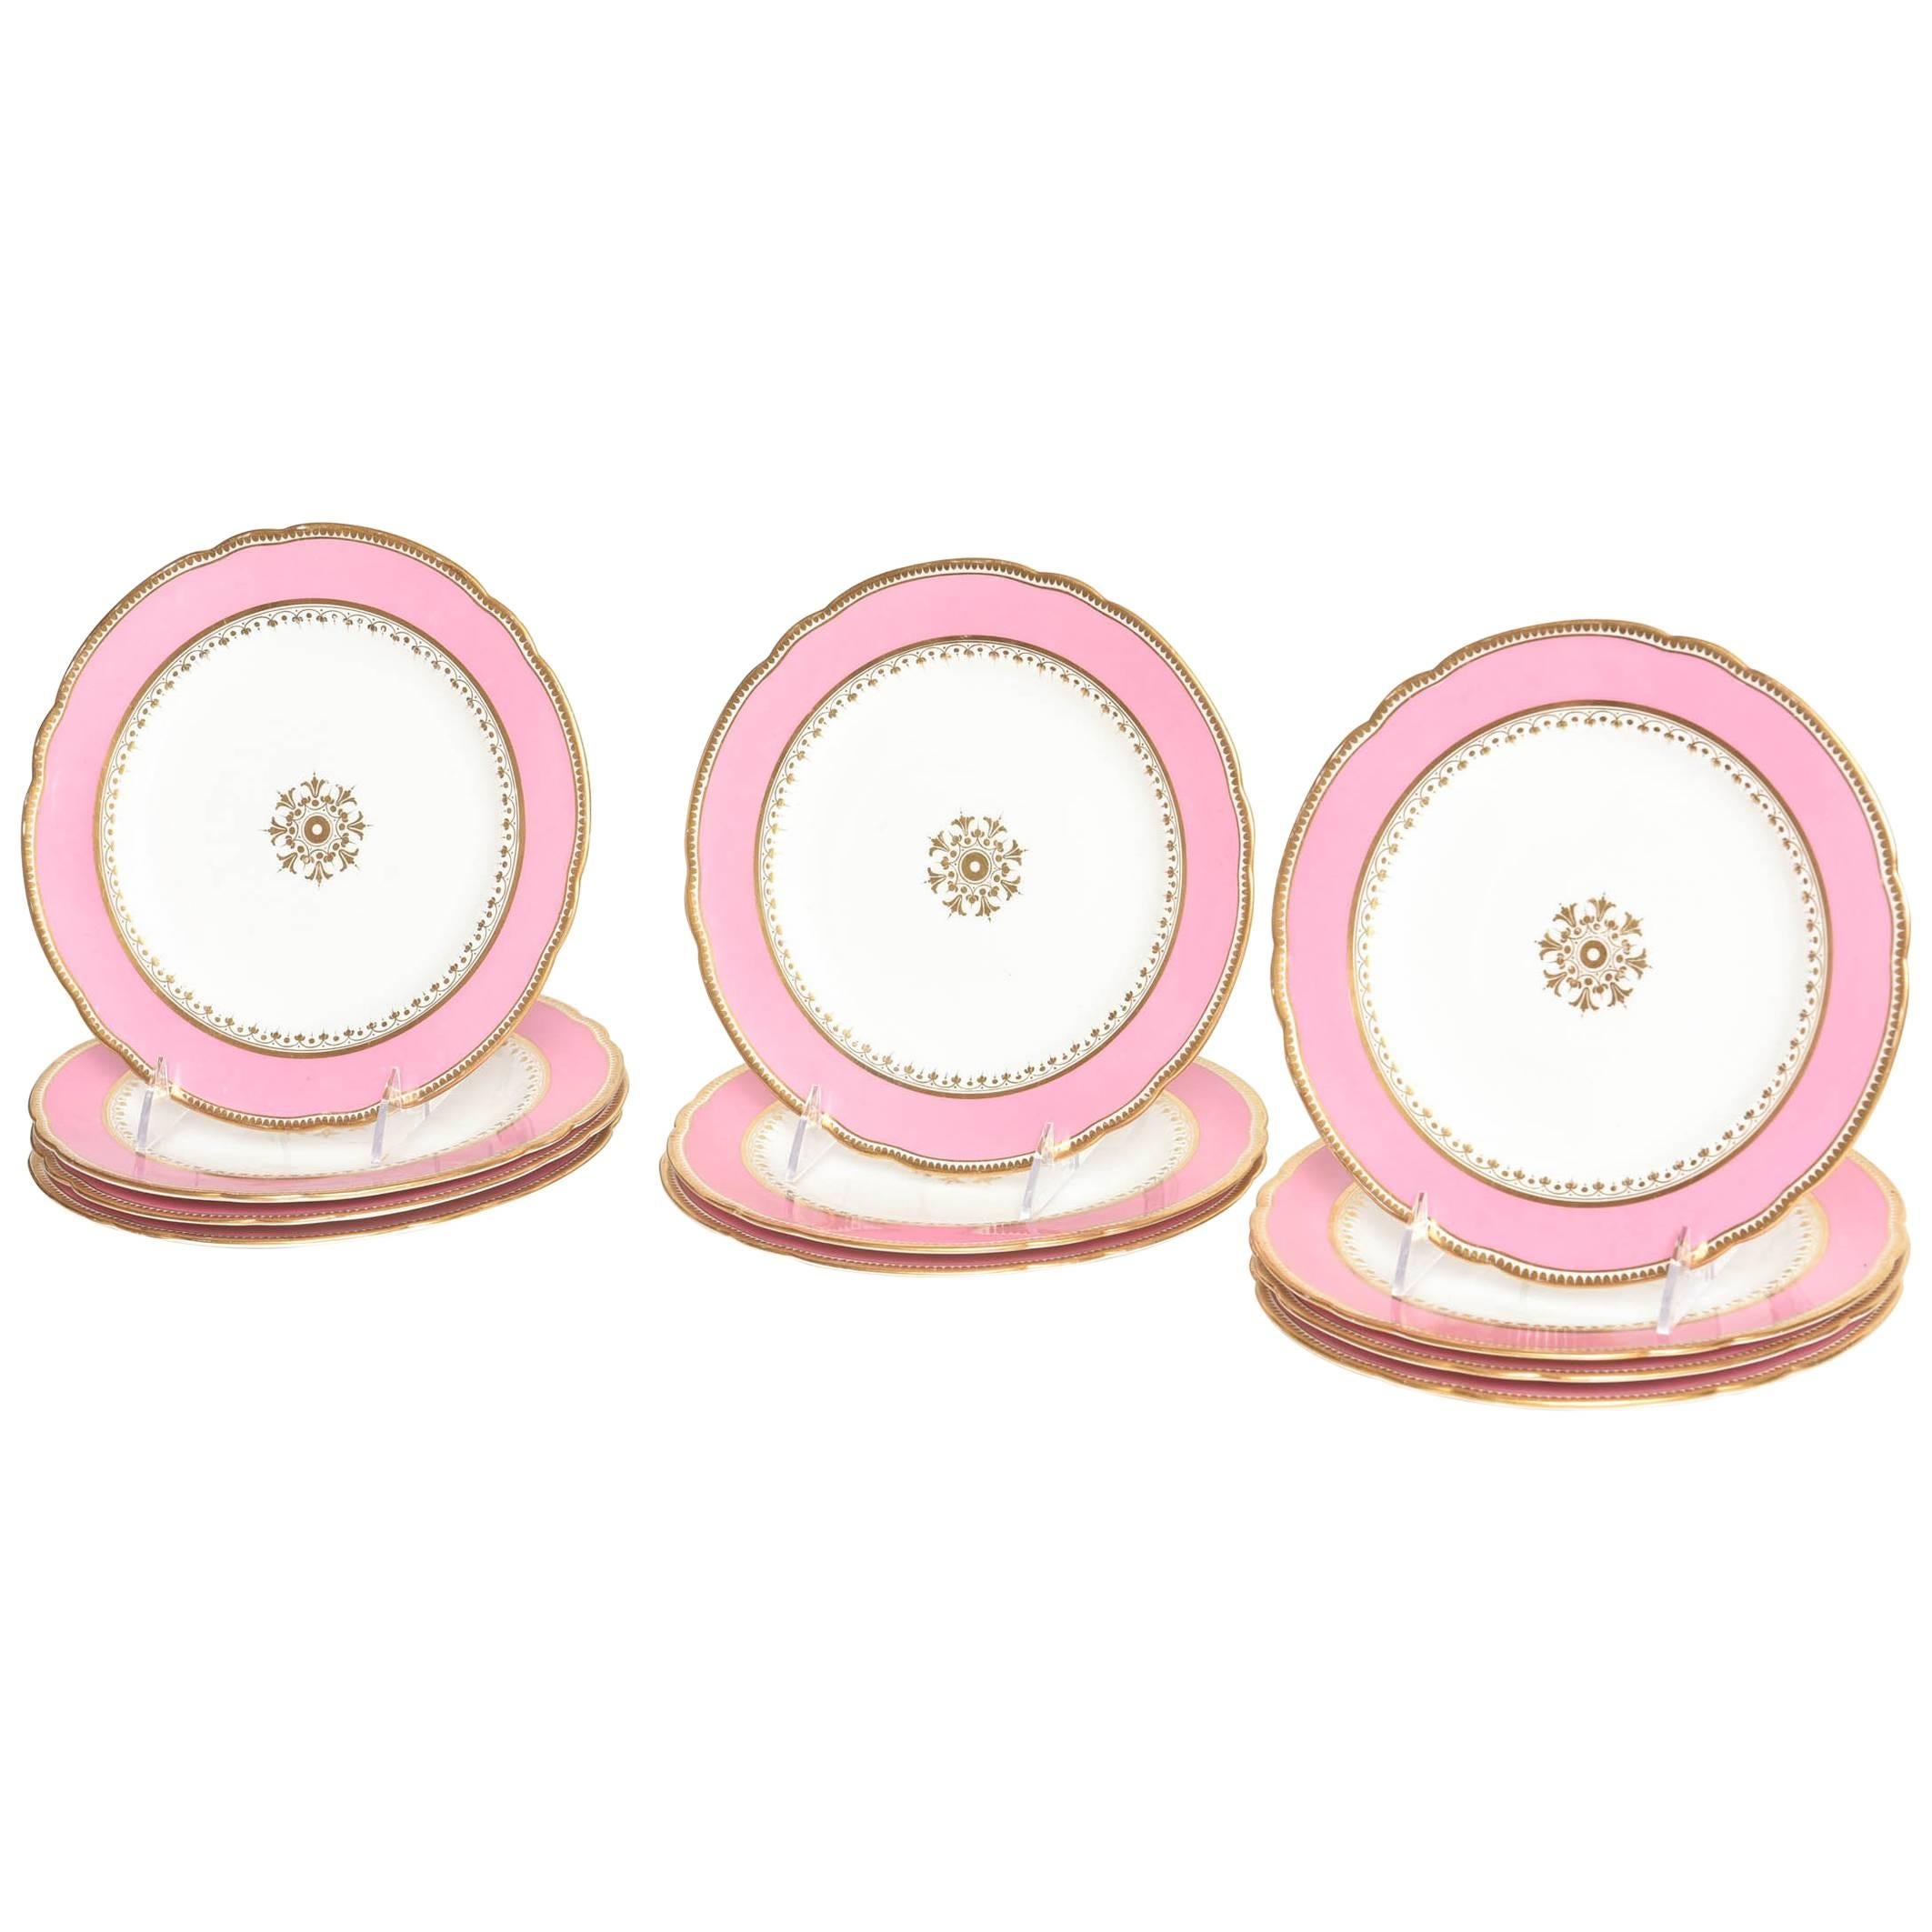 12 Antique Pink and Gold Dessert Plates, Gilt Centre Medallion